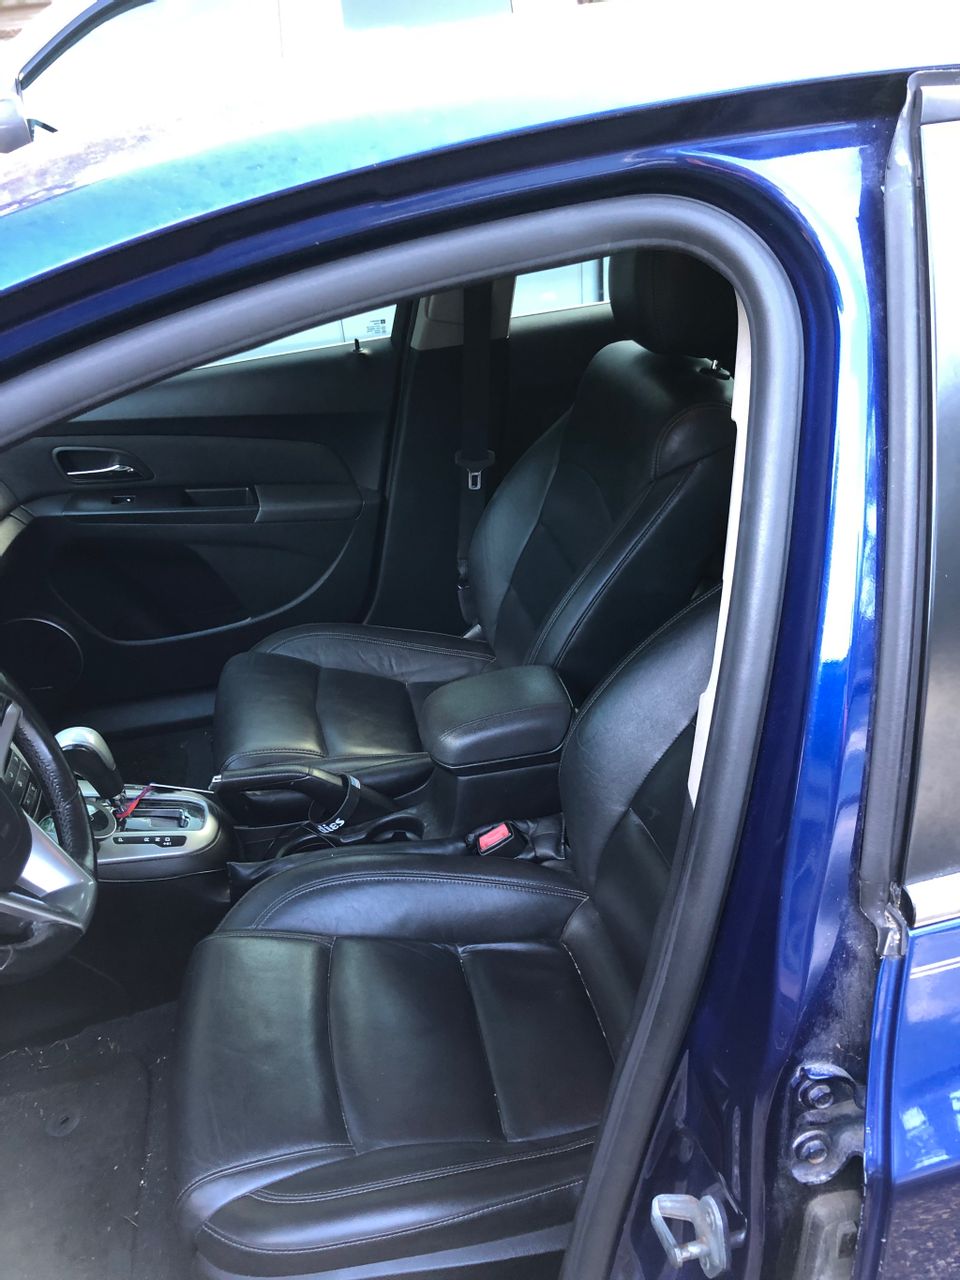 2012 Chevrolet Cruze LT | Tuckerton, NJ, Blue Granite Metallic (Blue), Front Wheel